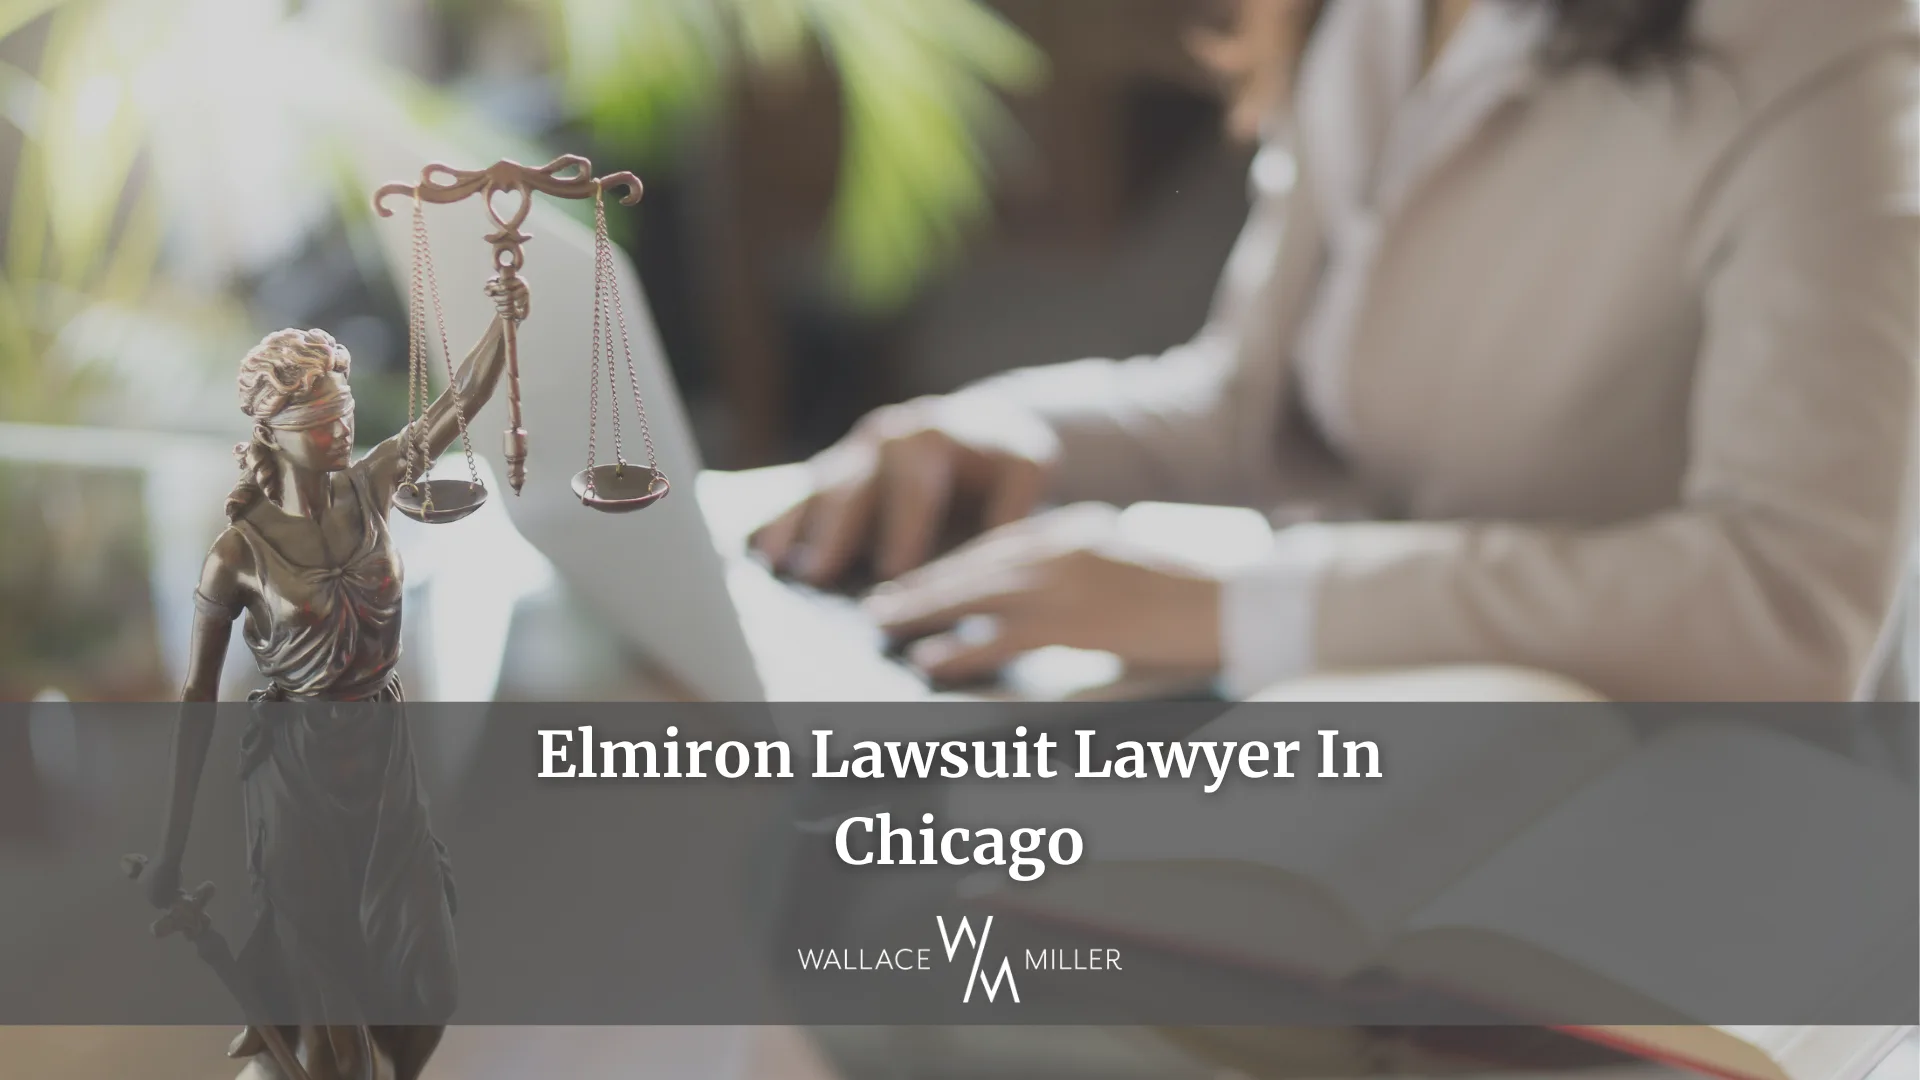 Elmiron Lawsuit Lawyer In Chicago